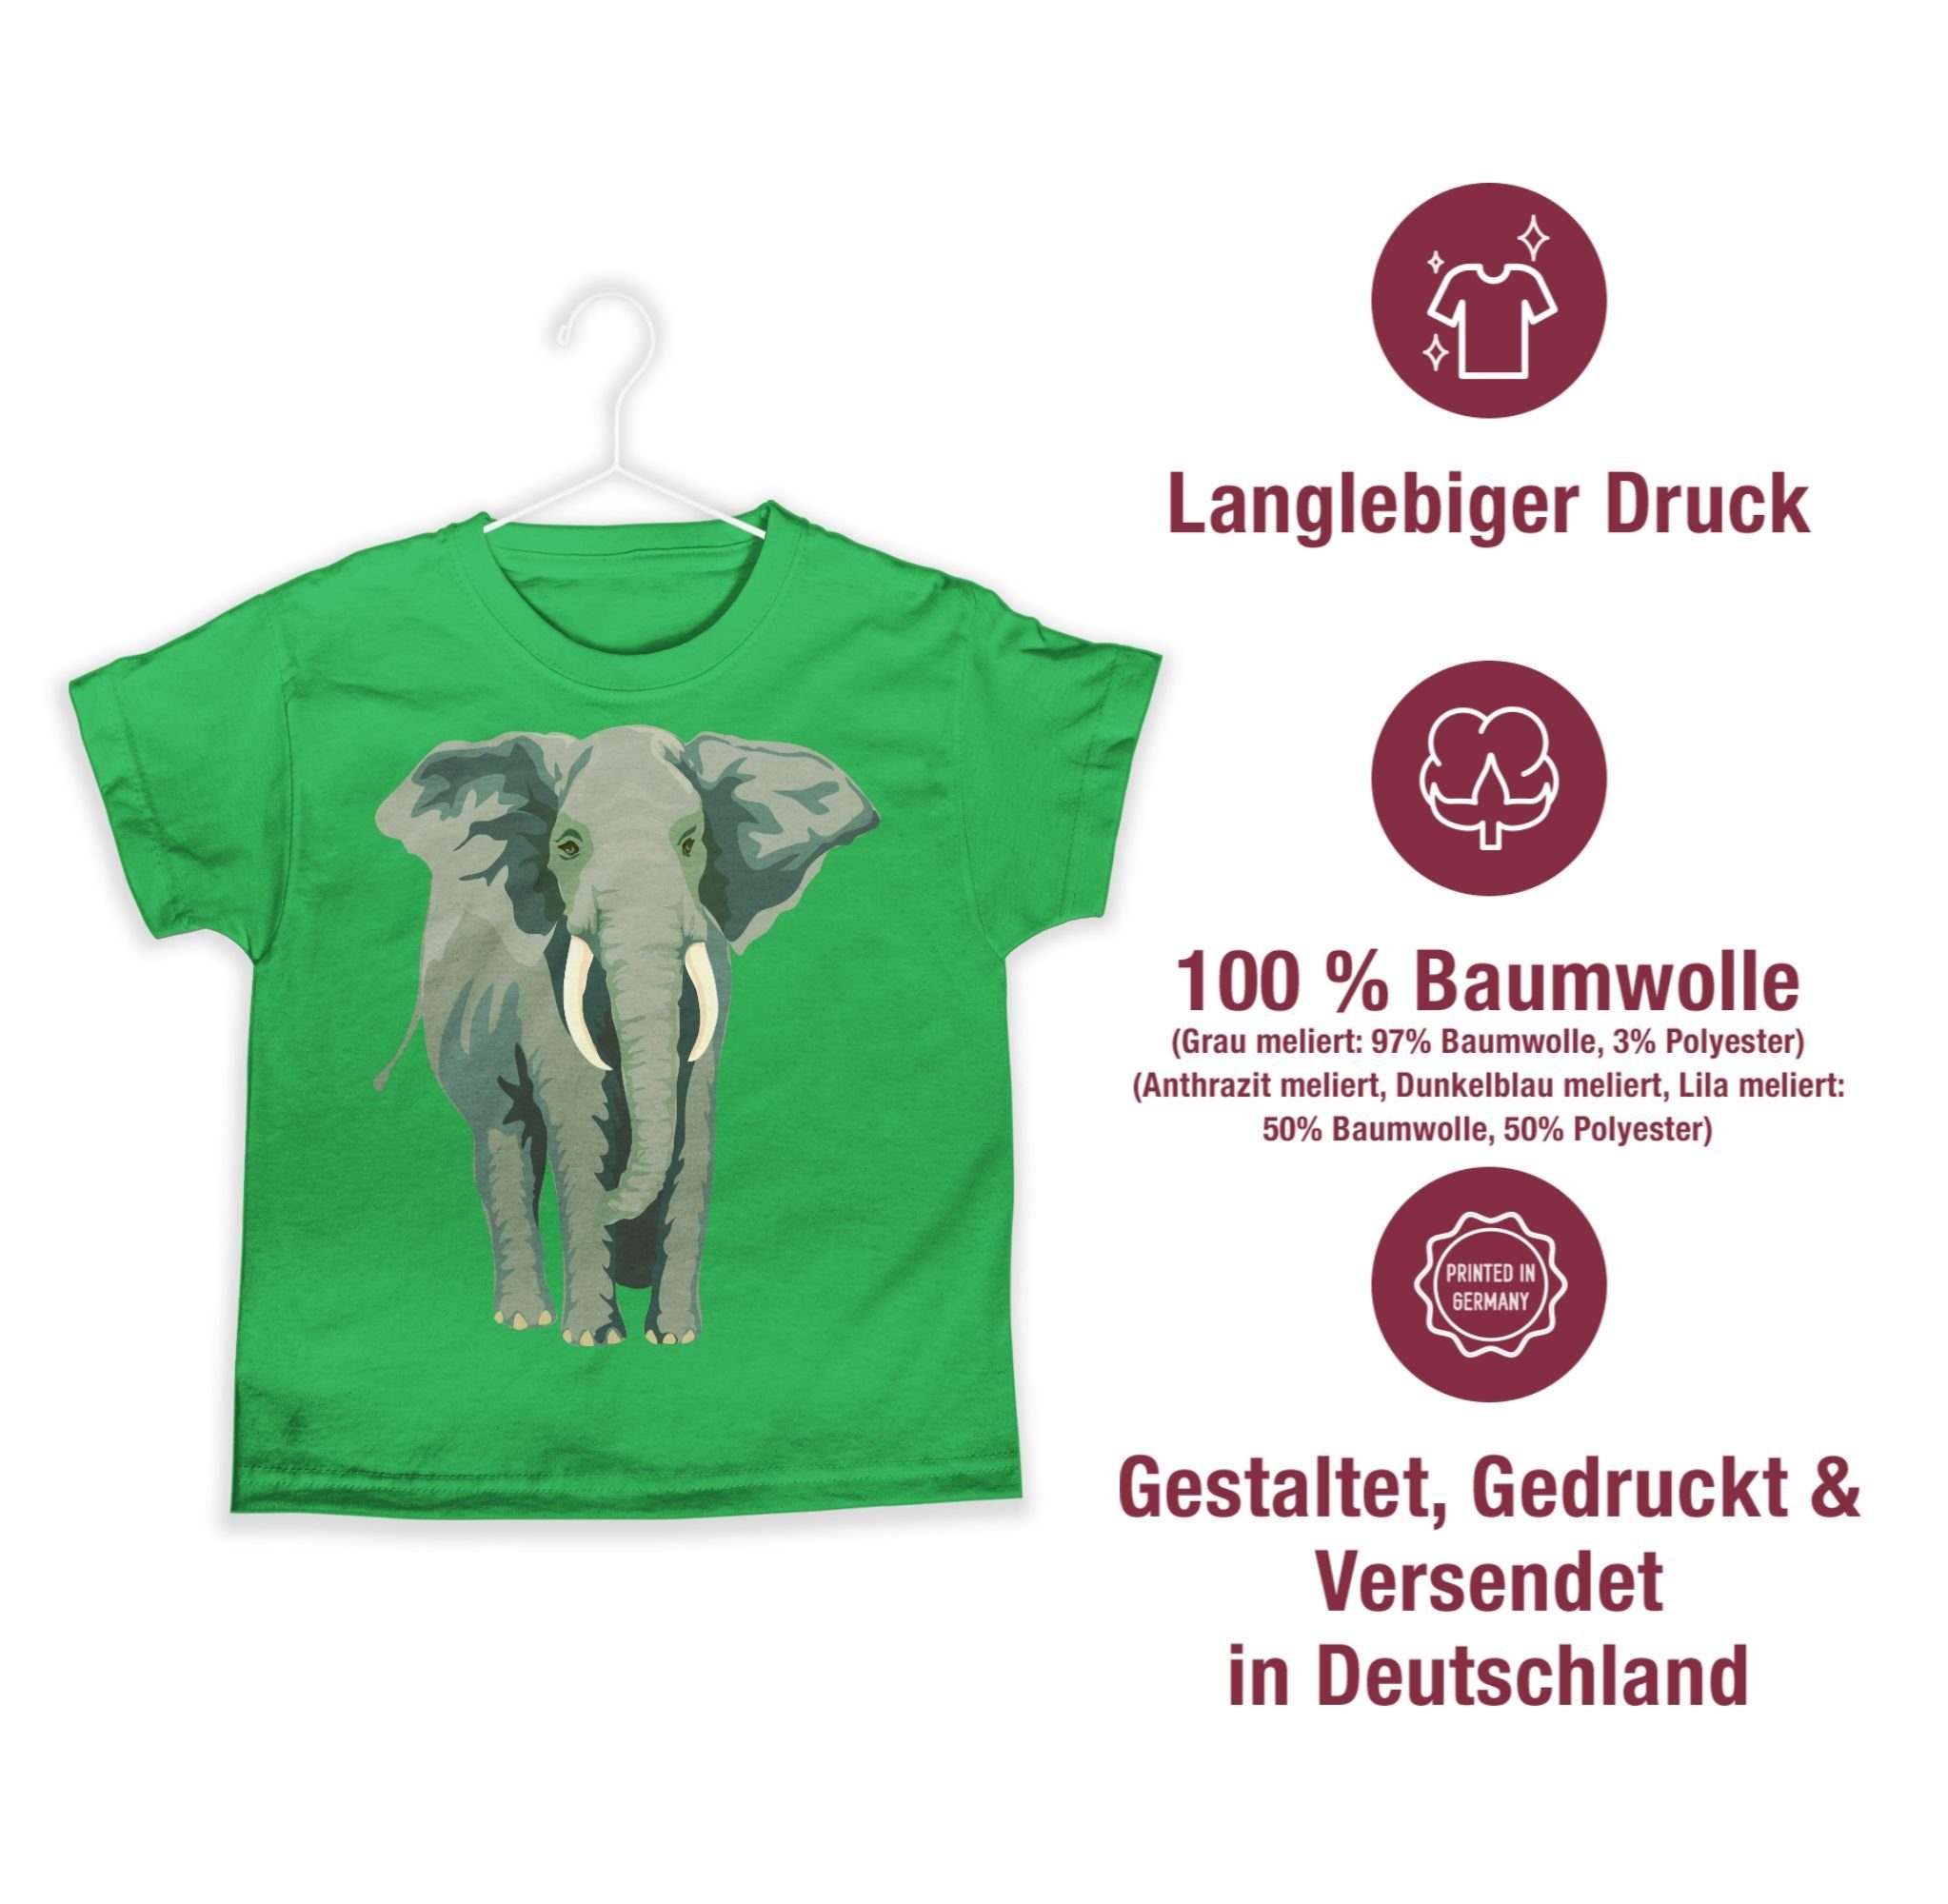 Tiermotiv Elefant Shirtracer 1 Animal Grün T-Shirt Print